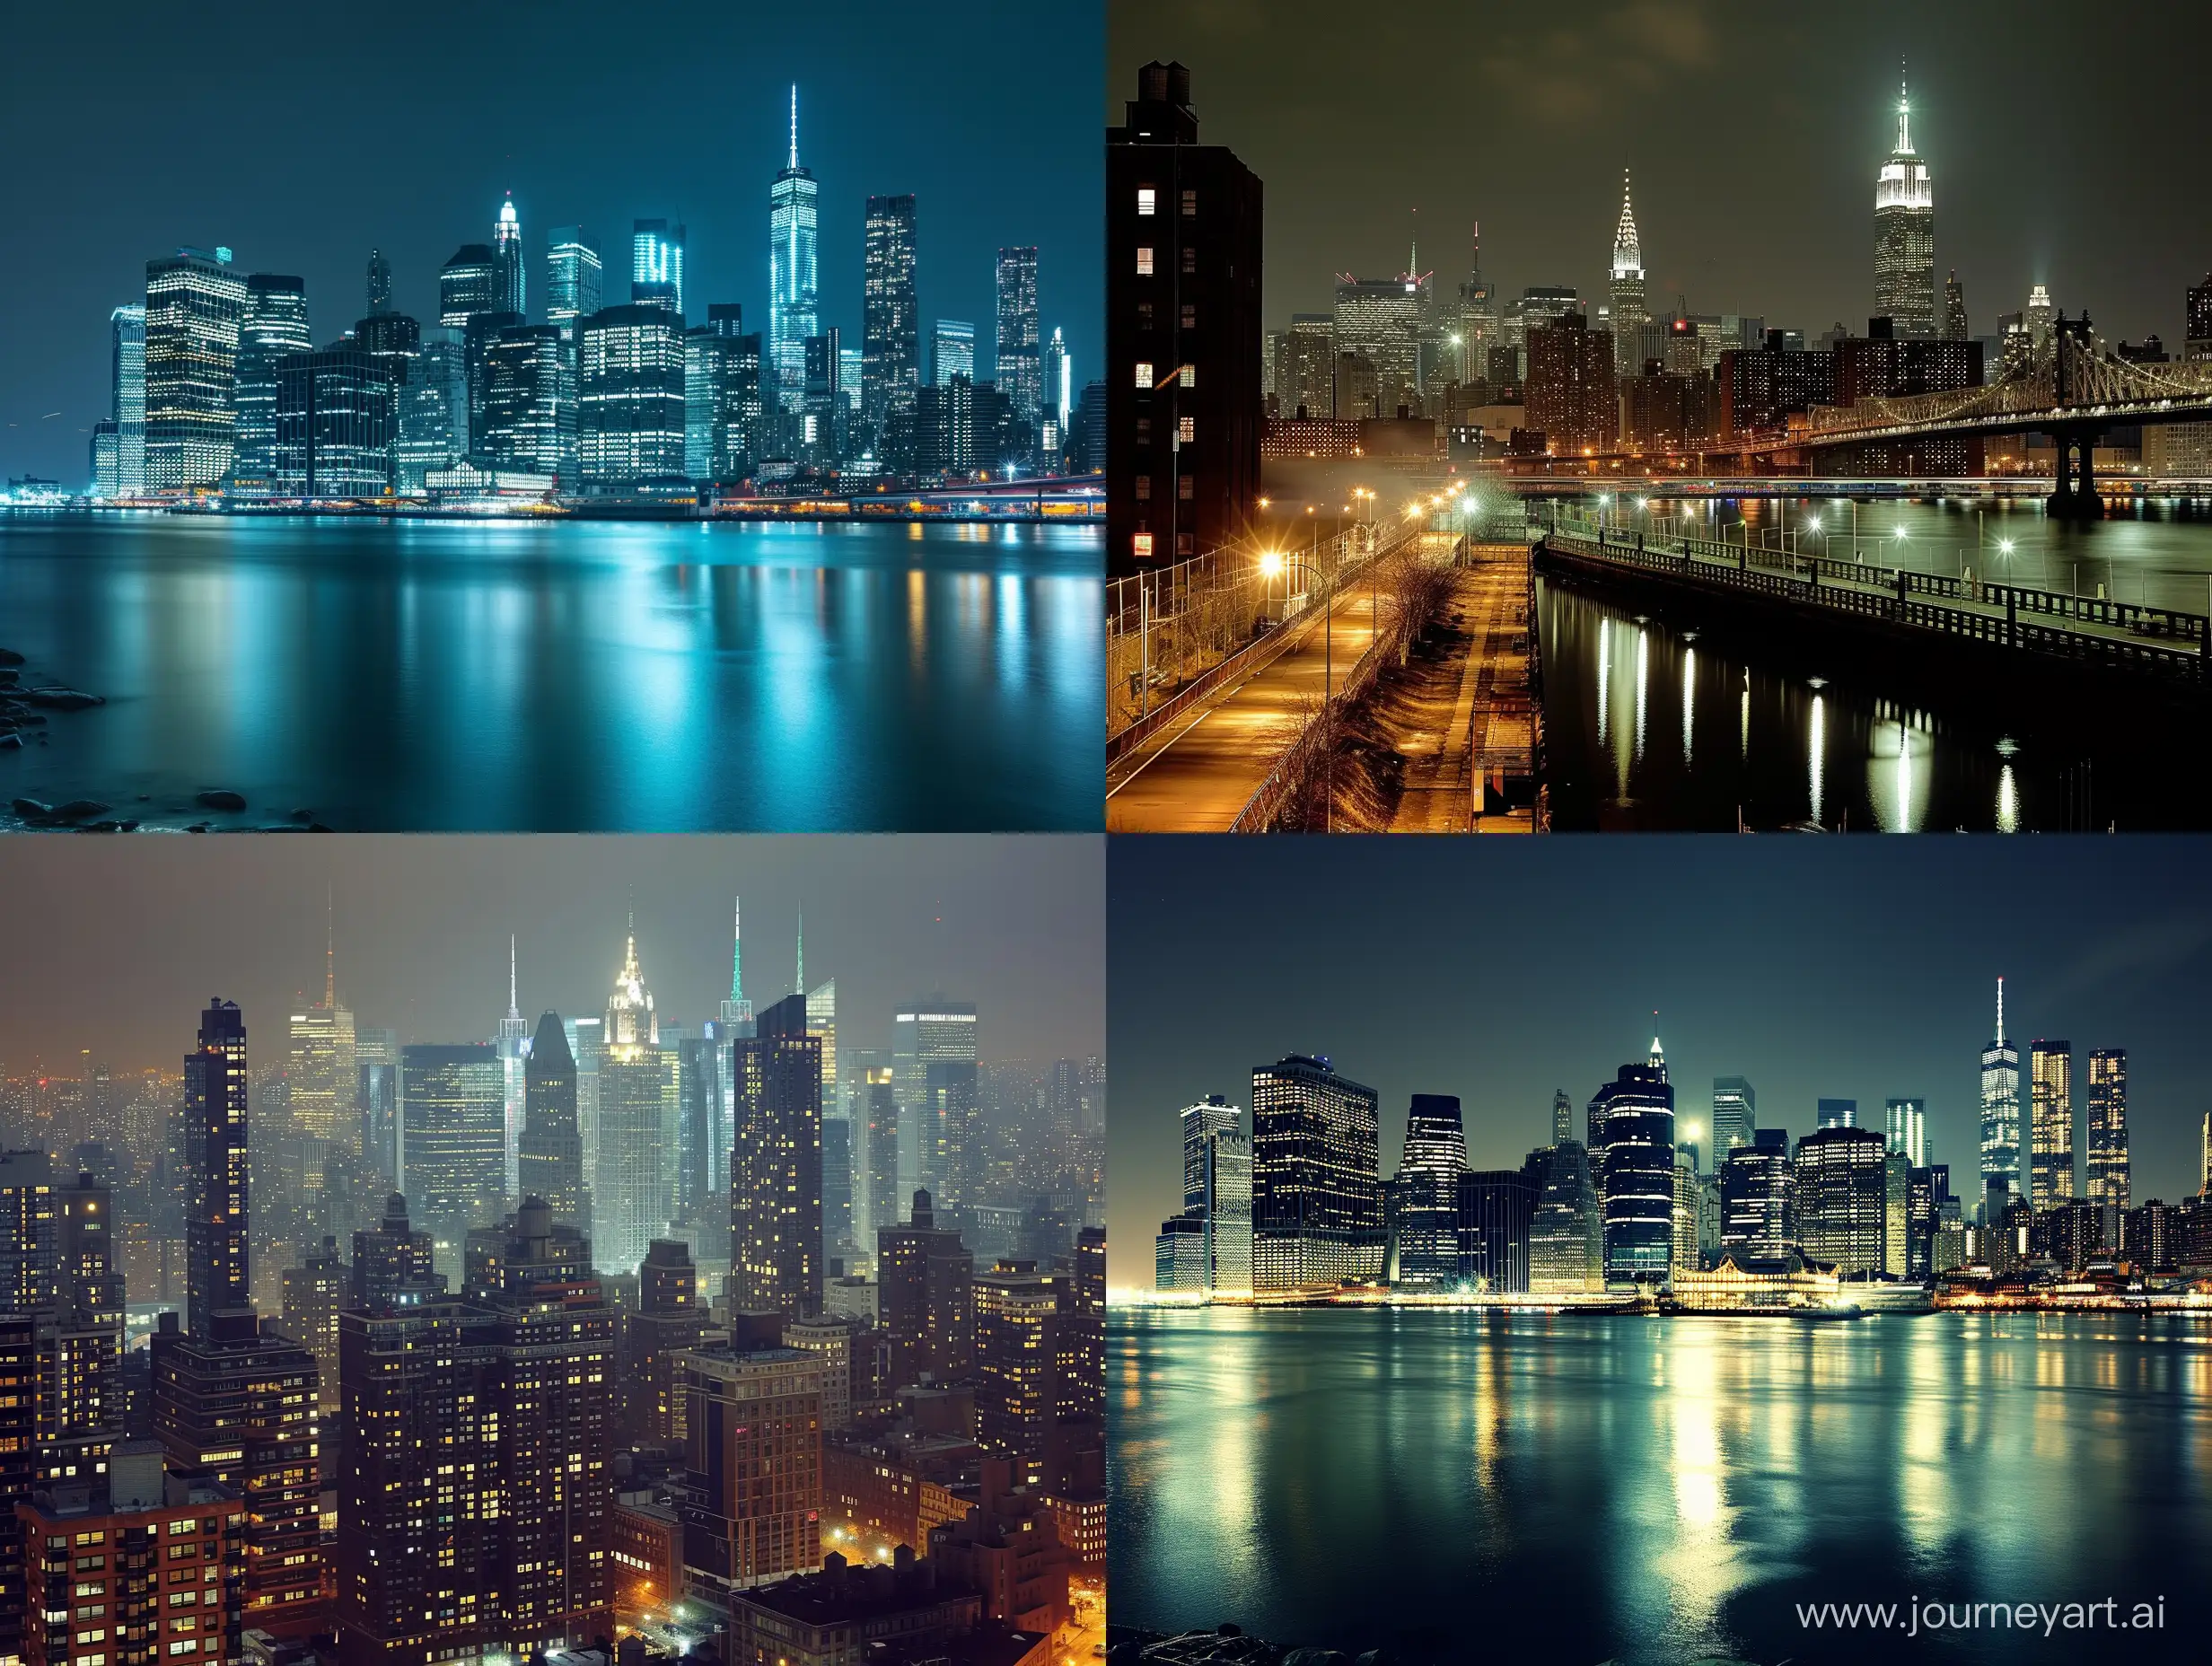 new york, night time, environment, photograph, photo, skyline, architecture,

